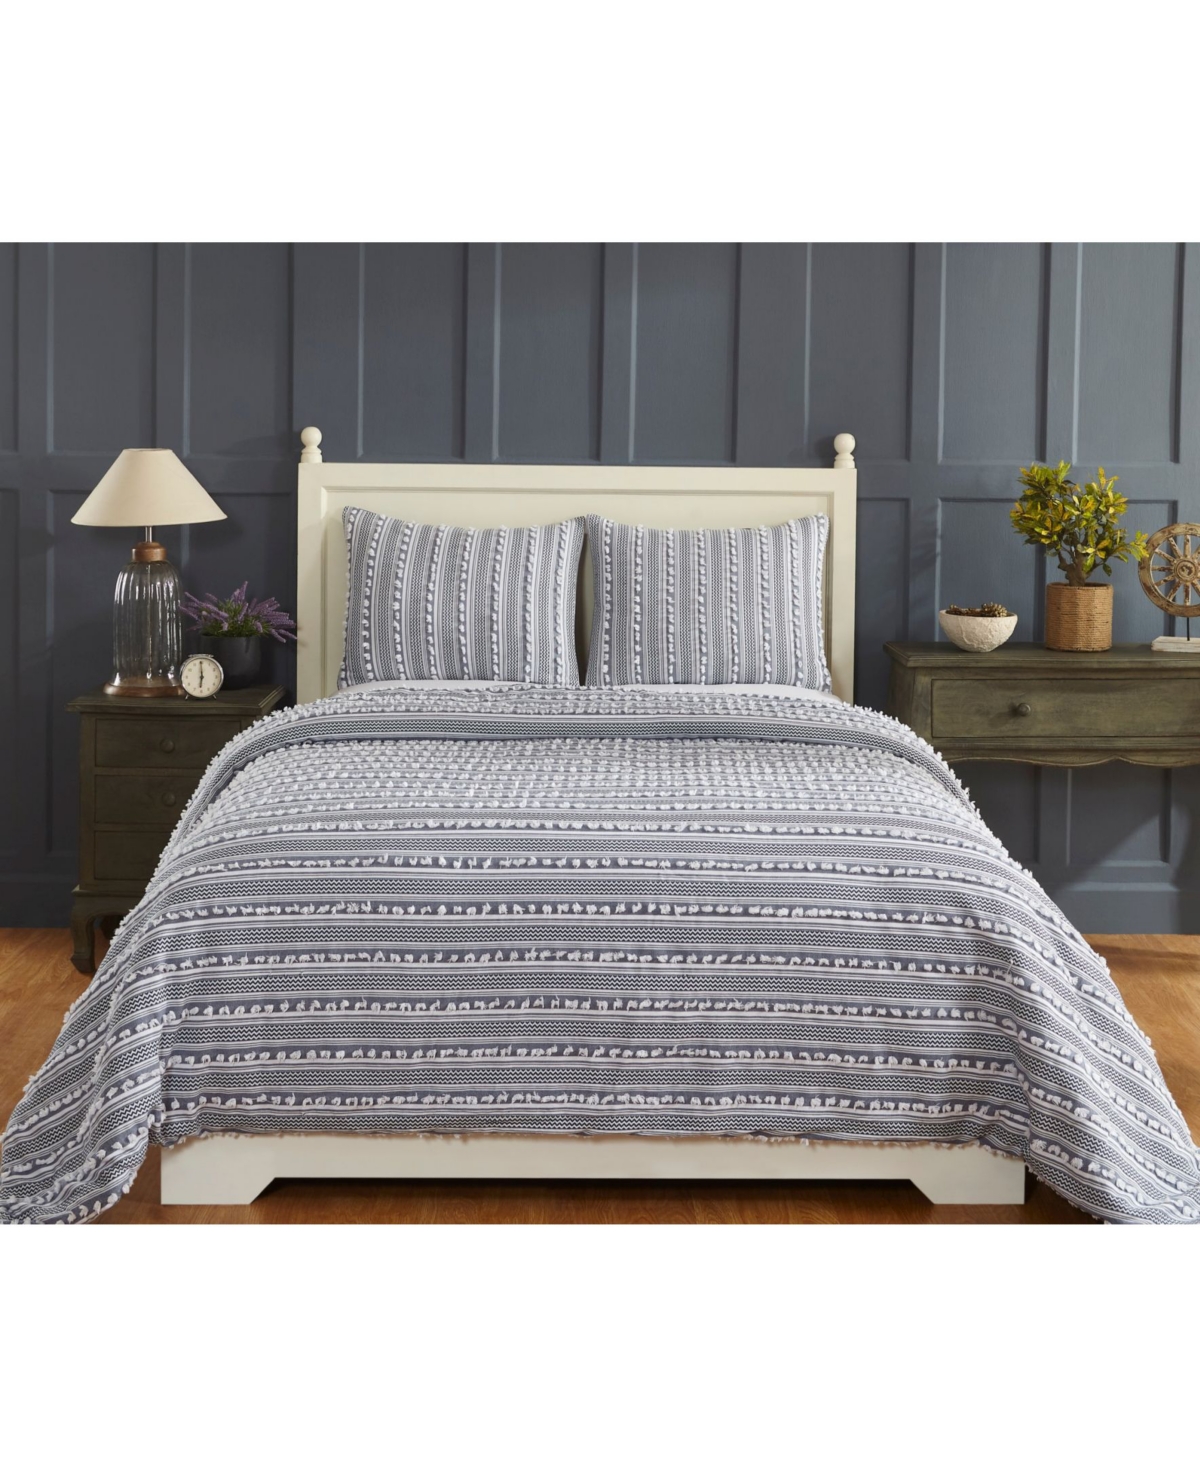 Anglique Full/Queen Comforter Bedding